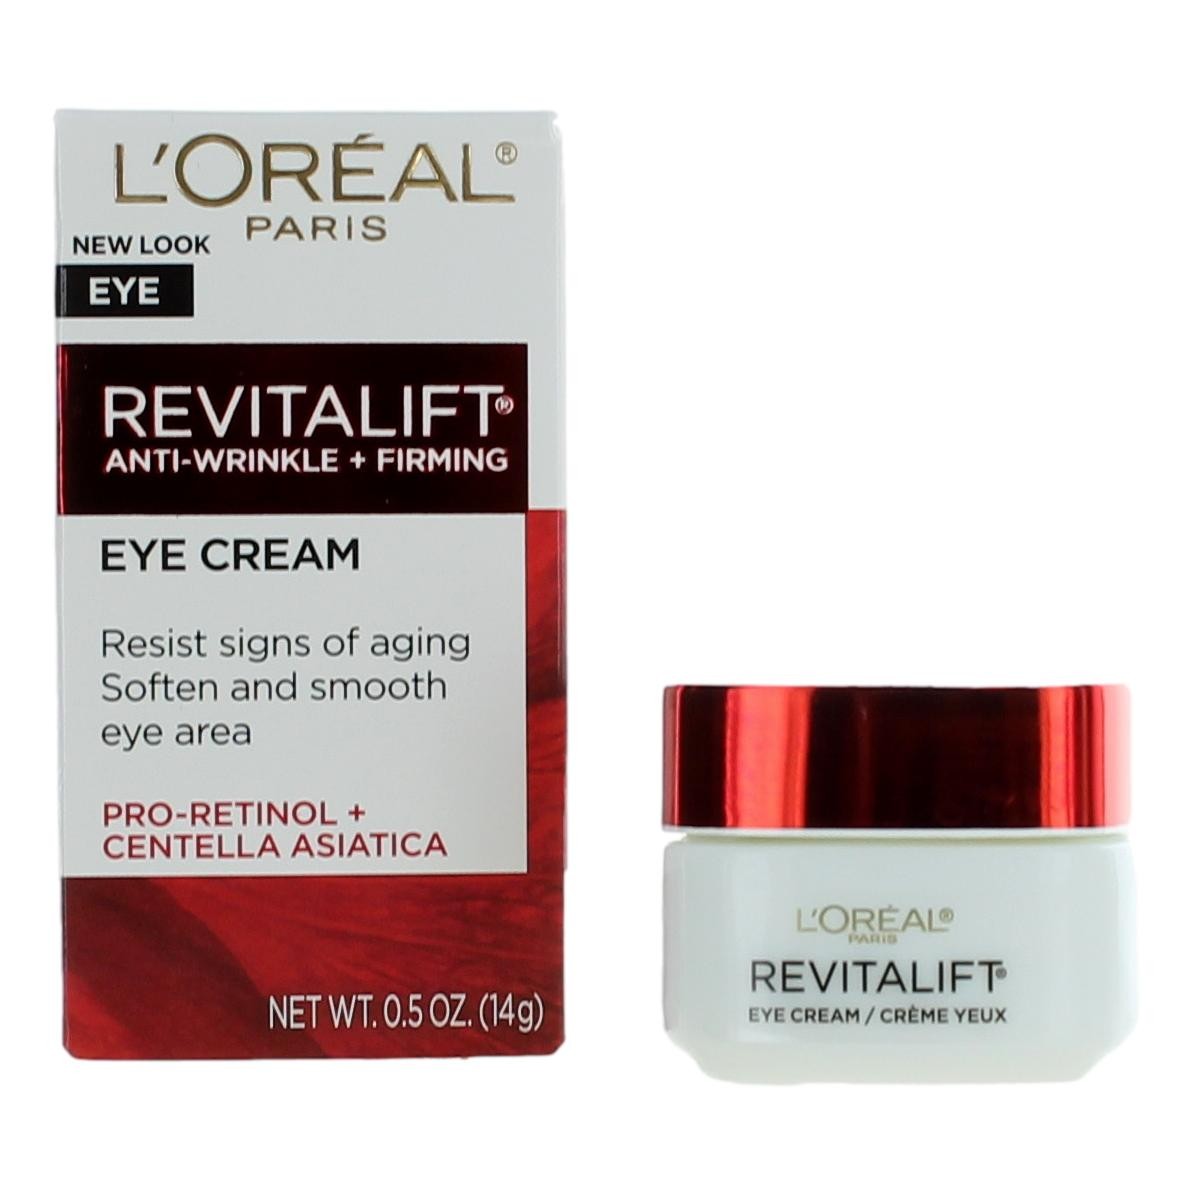 L'Oreal Revitalift Anti-Wrinkle + Firming by L'Oreal 0.5 oz Eye Cream